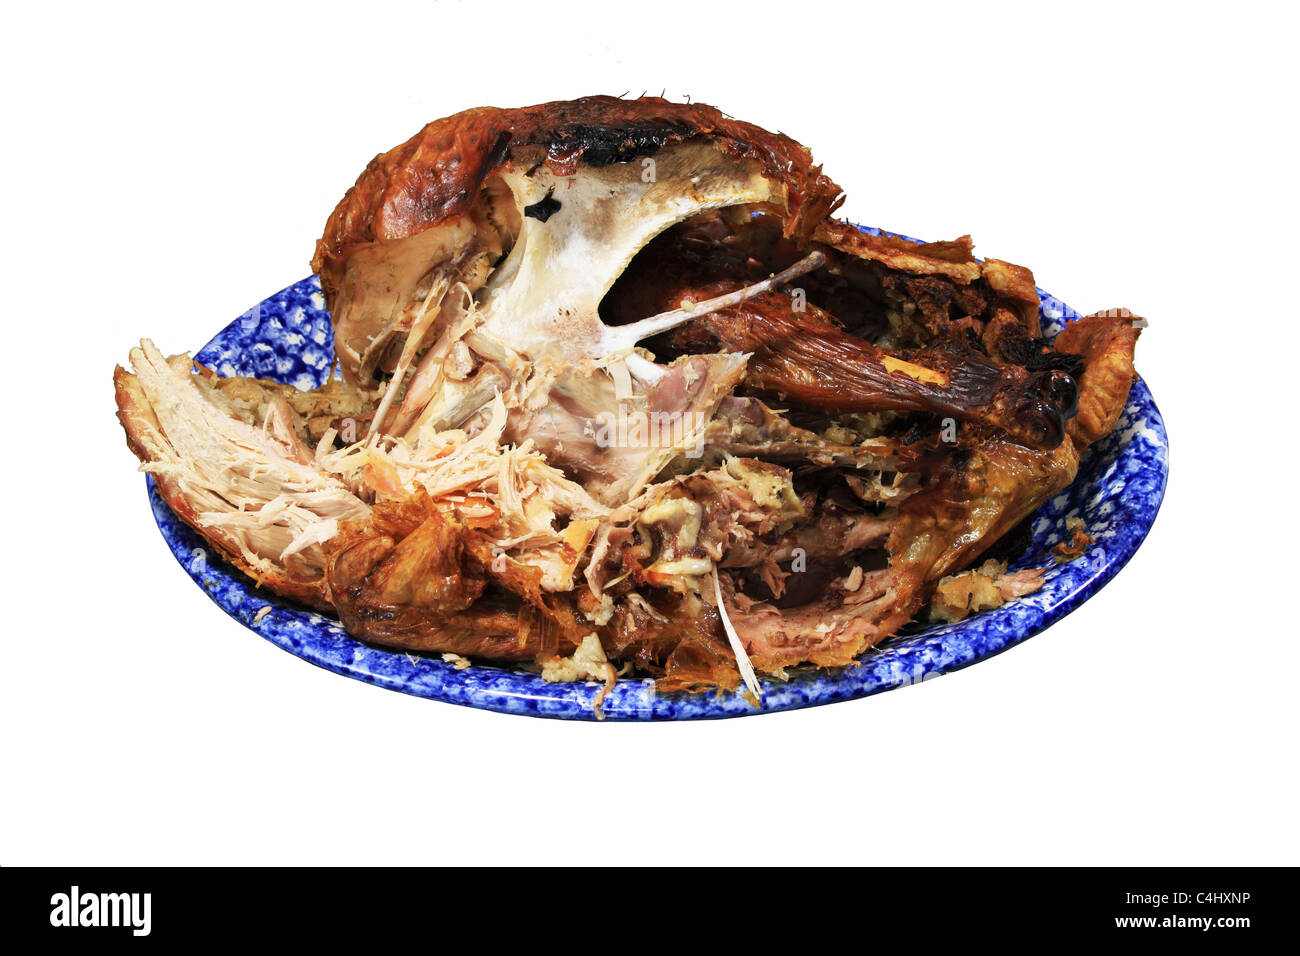 half eaten turkey carcass on a blue platter isolated on white background Stock Photo